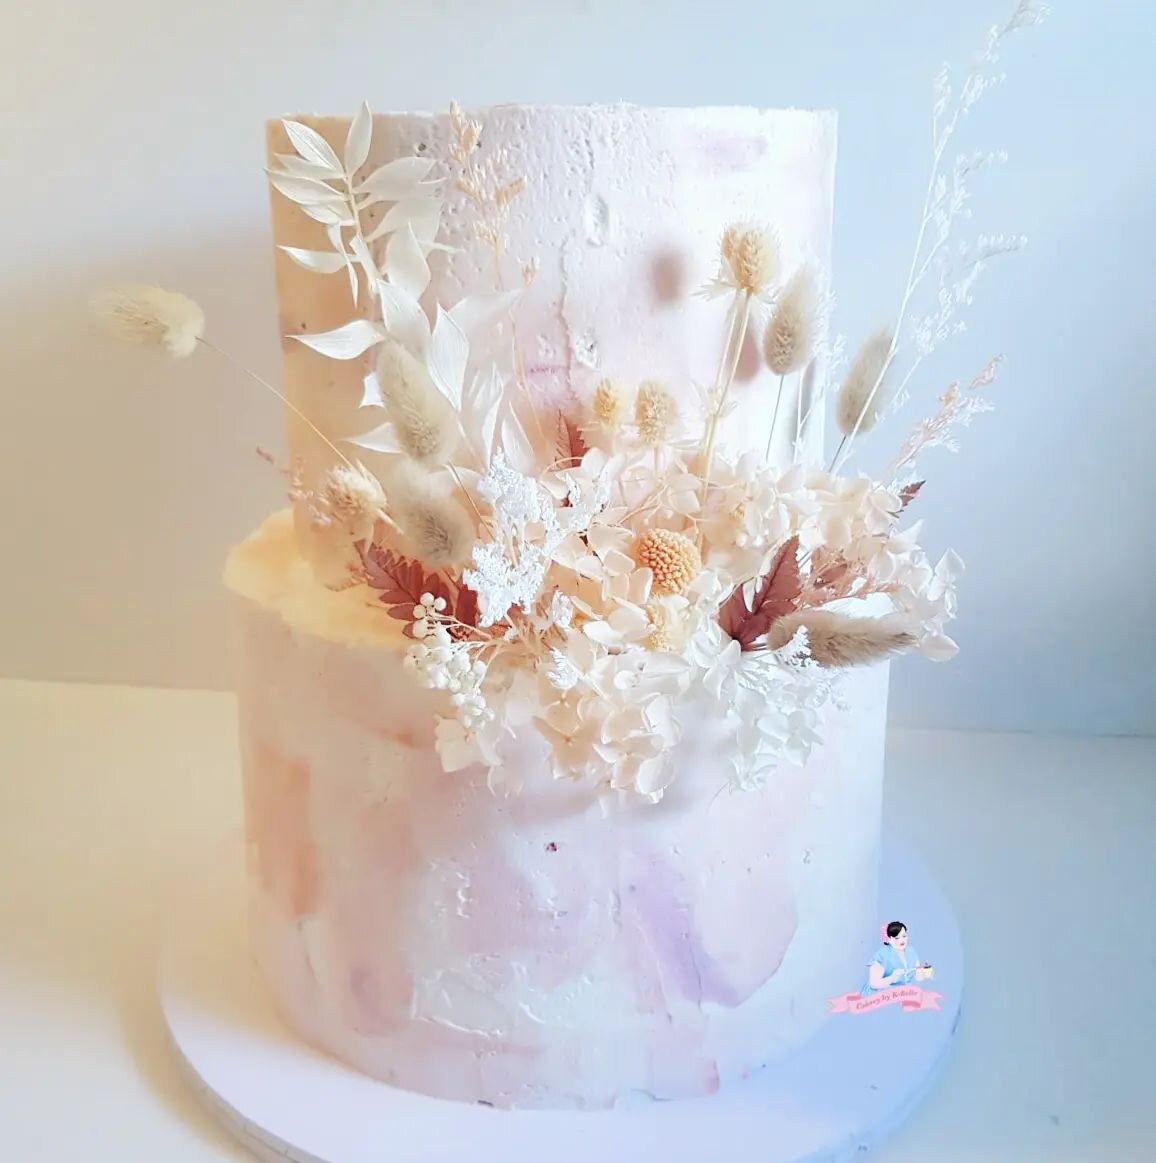 Soft &amp; delicate for this wedding cake! 

Dried flowers by @fleured_up

#cakerybykbelle #weddingcake #weddingcakessydney #wedding #weddingcakewithflowers #weddingcakes #weddingcakesofinstagram #driedflowers #driedflowercake #texturalcake #palettek